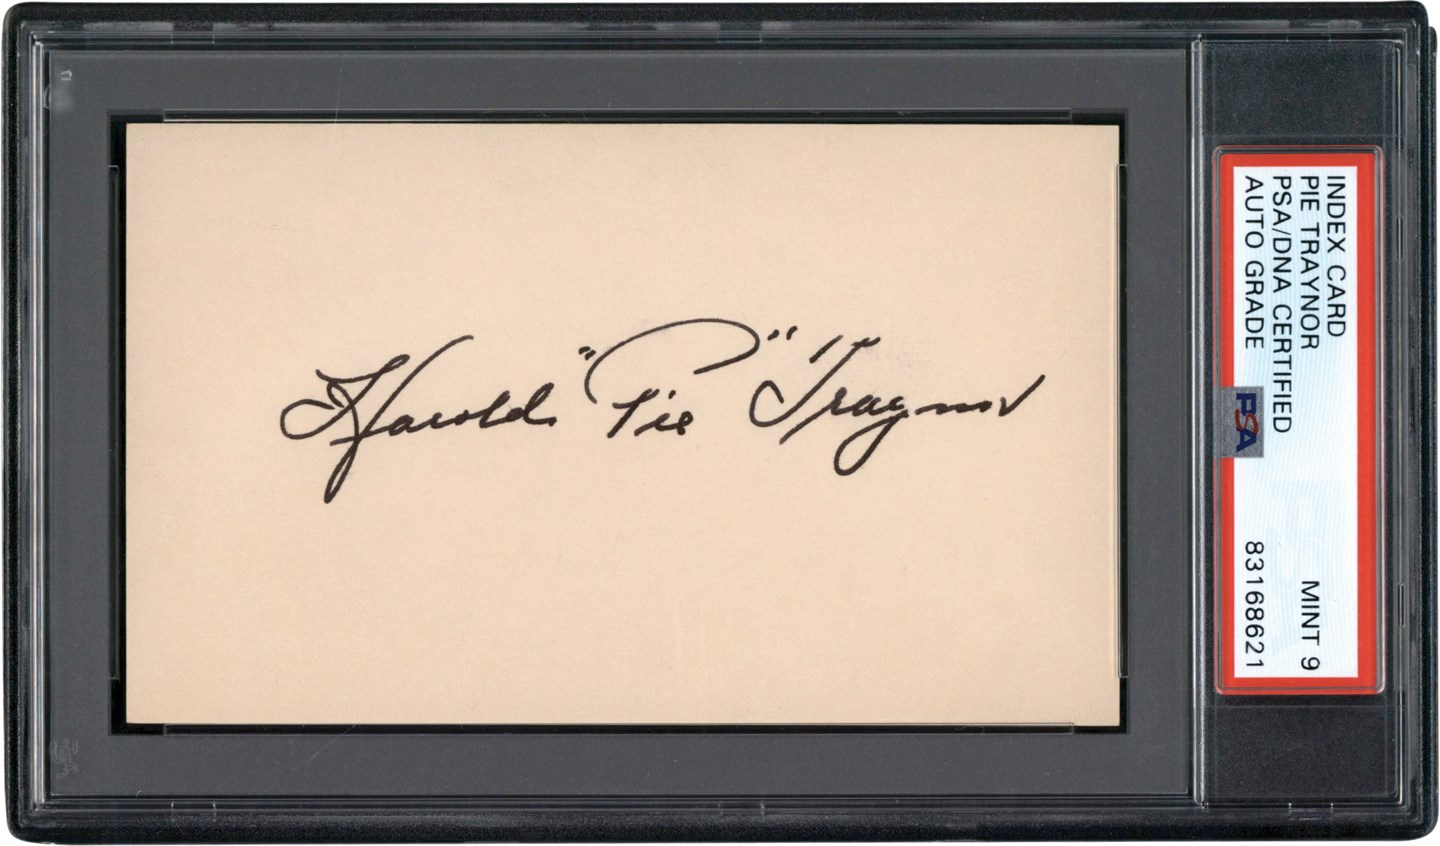 - Harold "Pie" Traynor Full Name Autograph (PSA MINT 9)